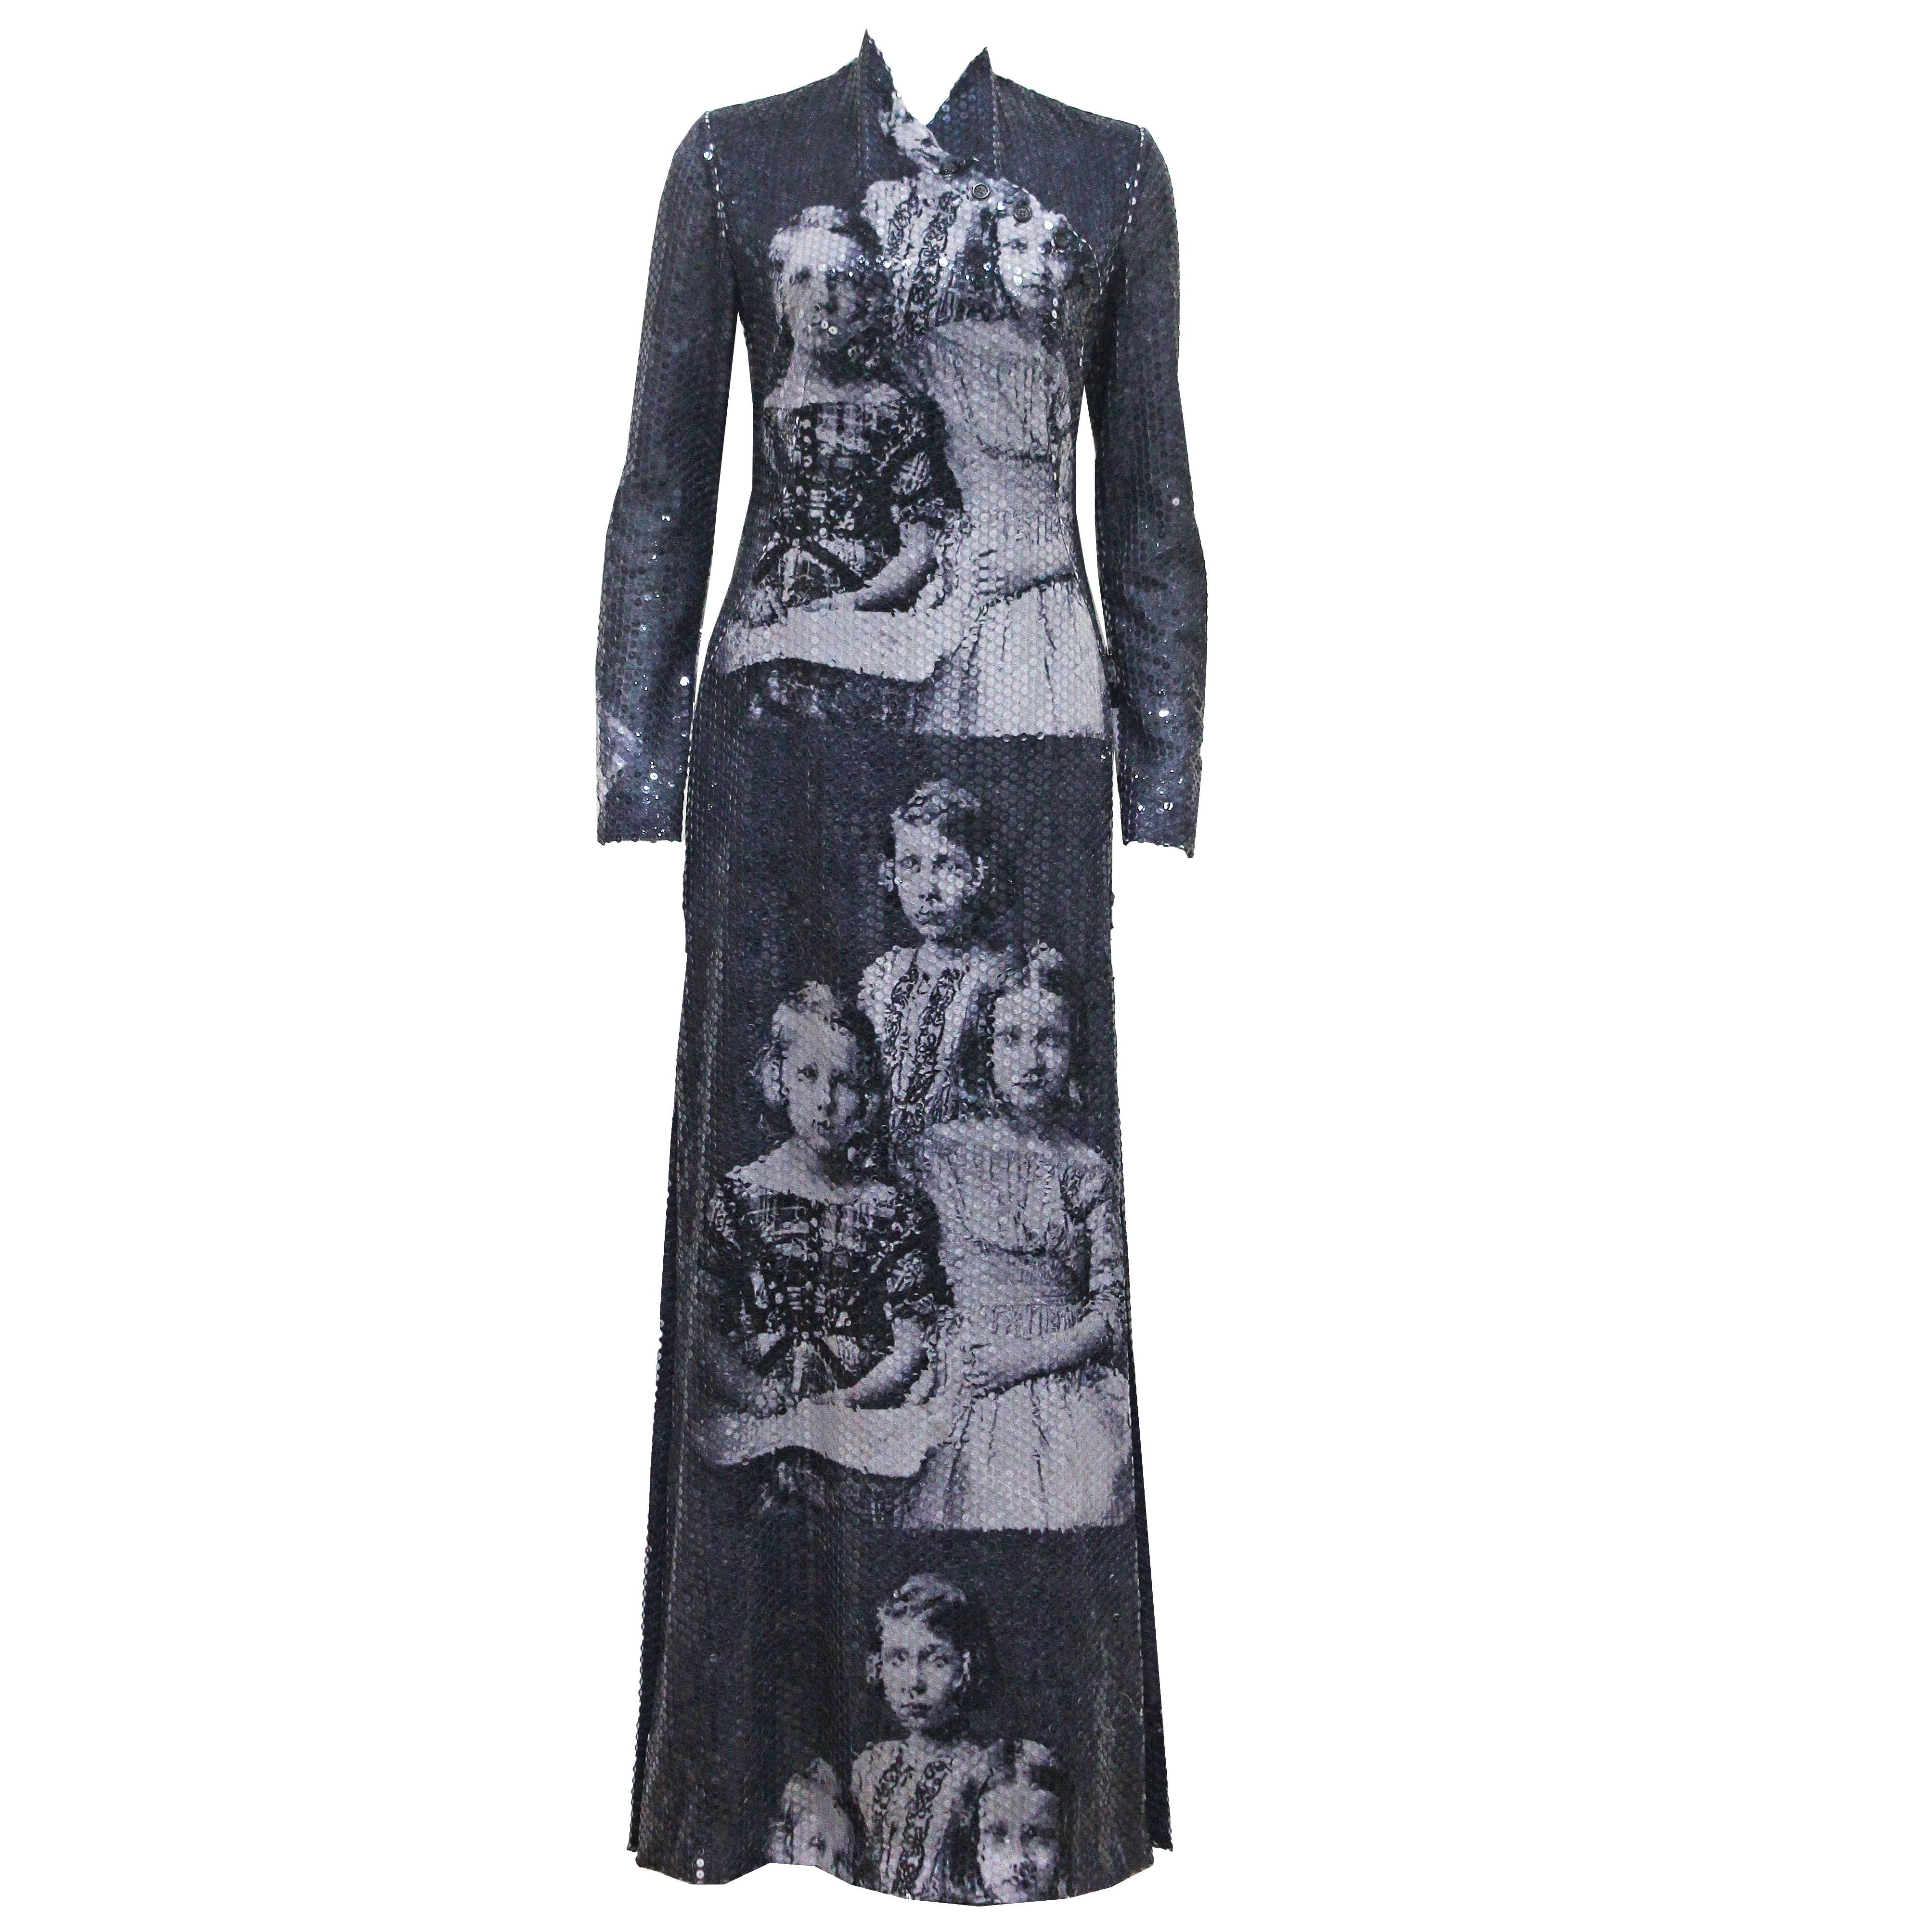 Alexander McQueen sequined 'Romanov Princesses' dress, 'Joan' Collection c. 1998